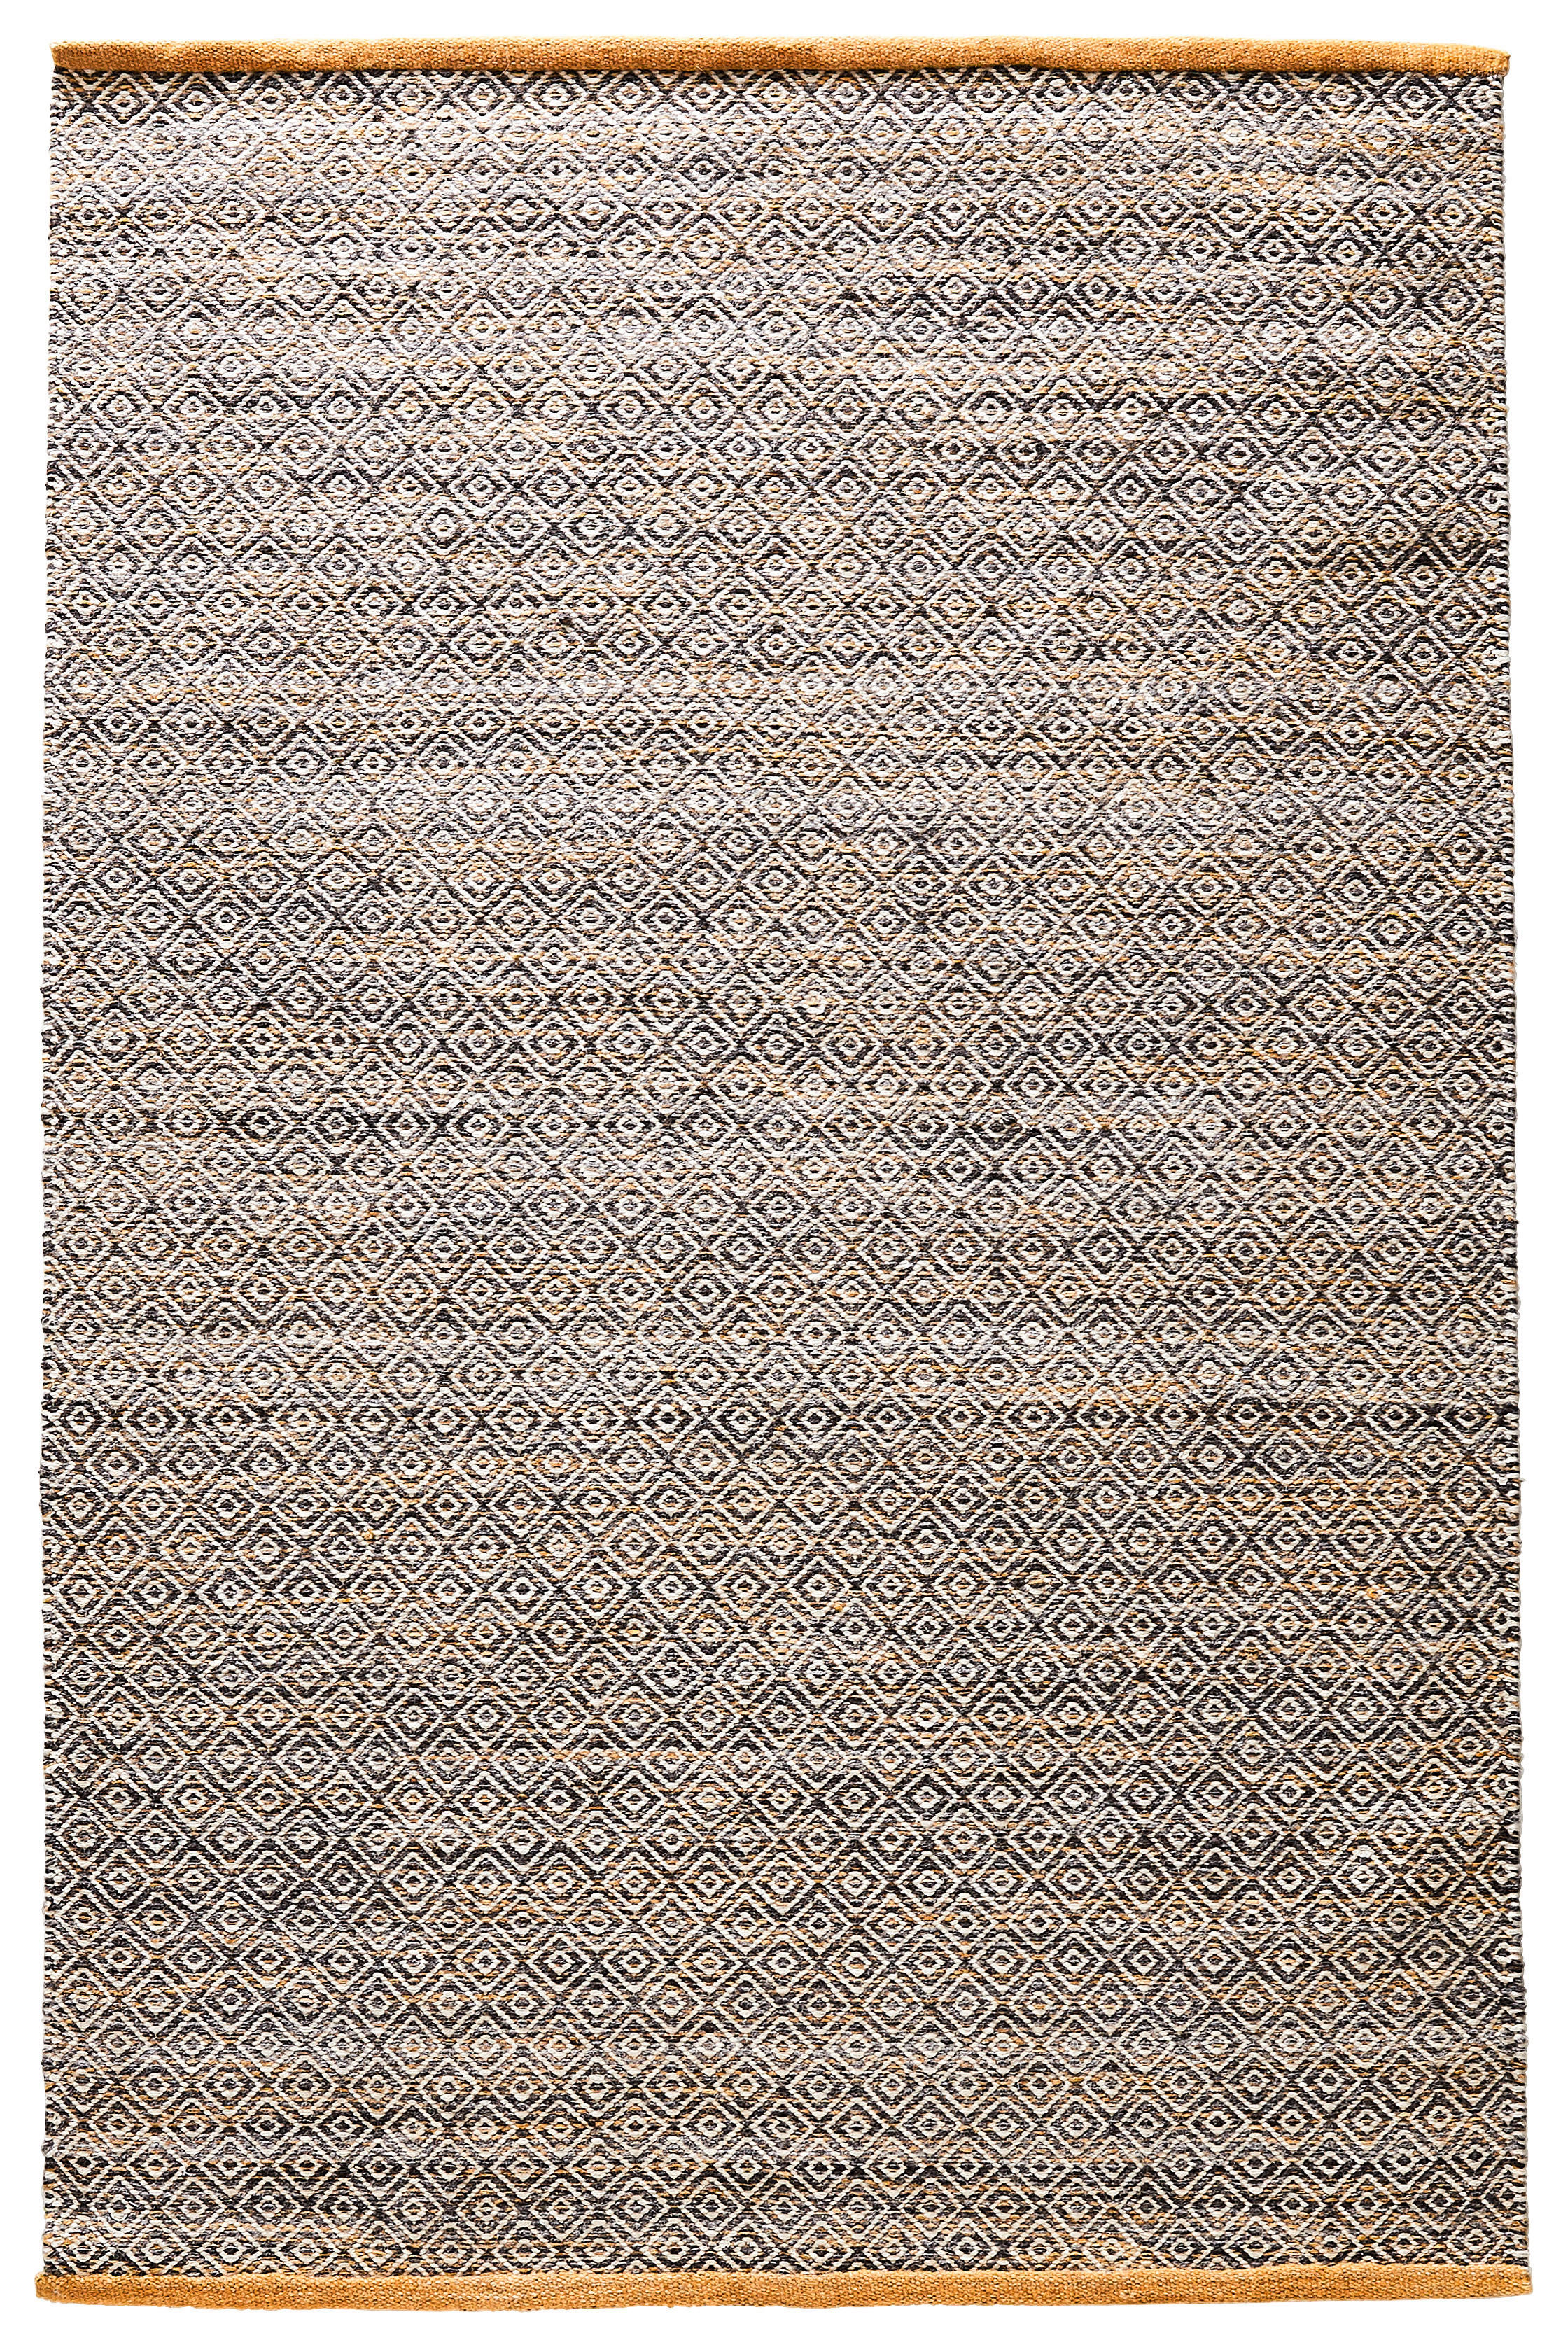 Wollteppich 130/190 cm Jupiter  - Currygelb, Natur, Textil (130/190cm) - Linea Natura